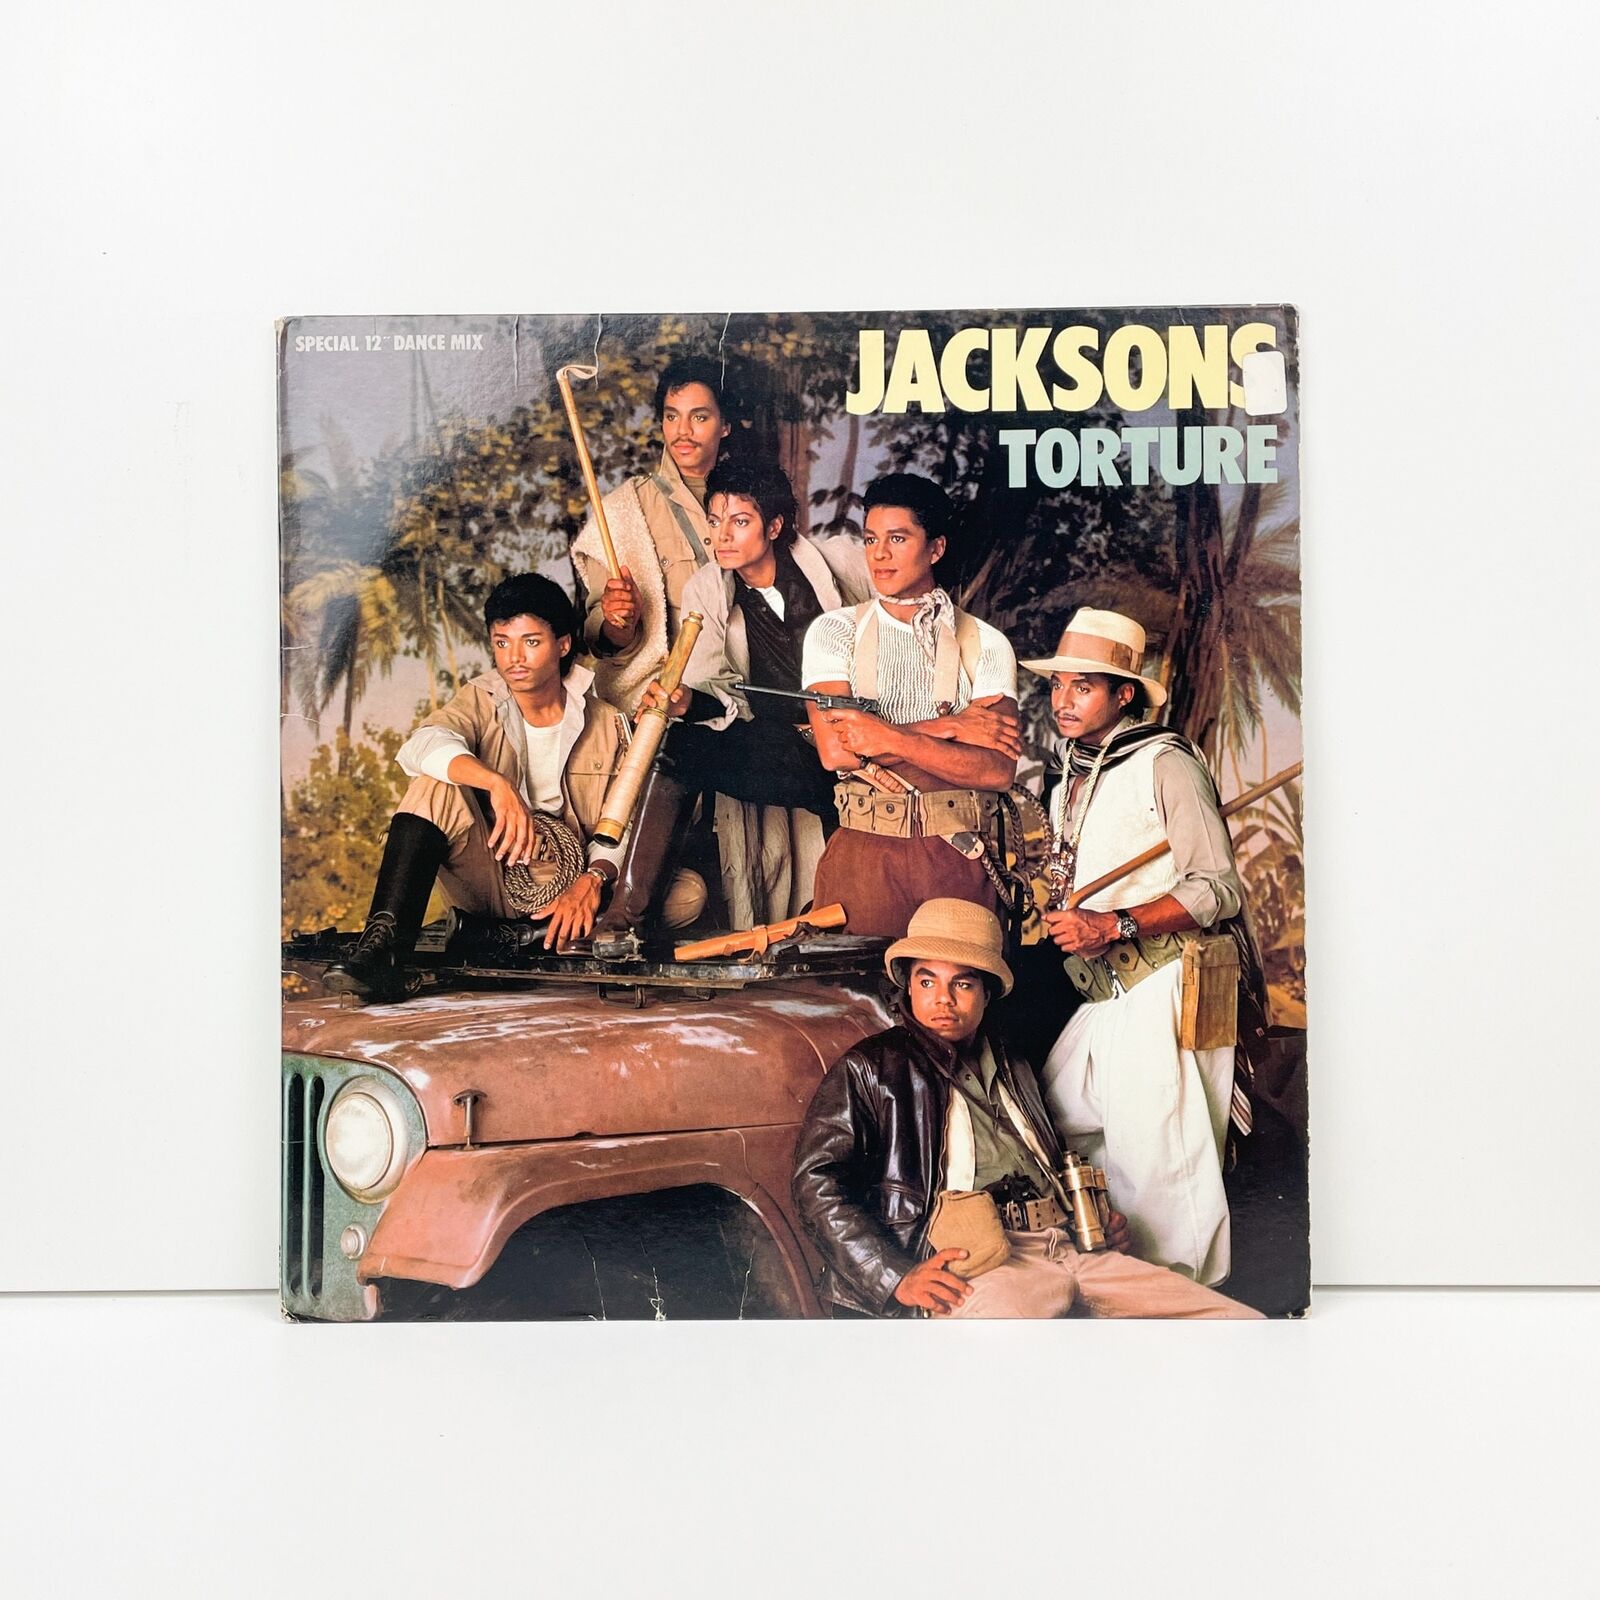 Jacksons - Torture - Vinyl LP Record - 1984